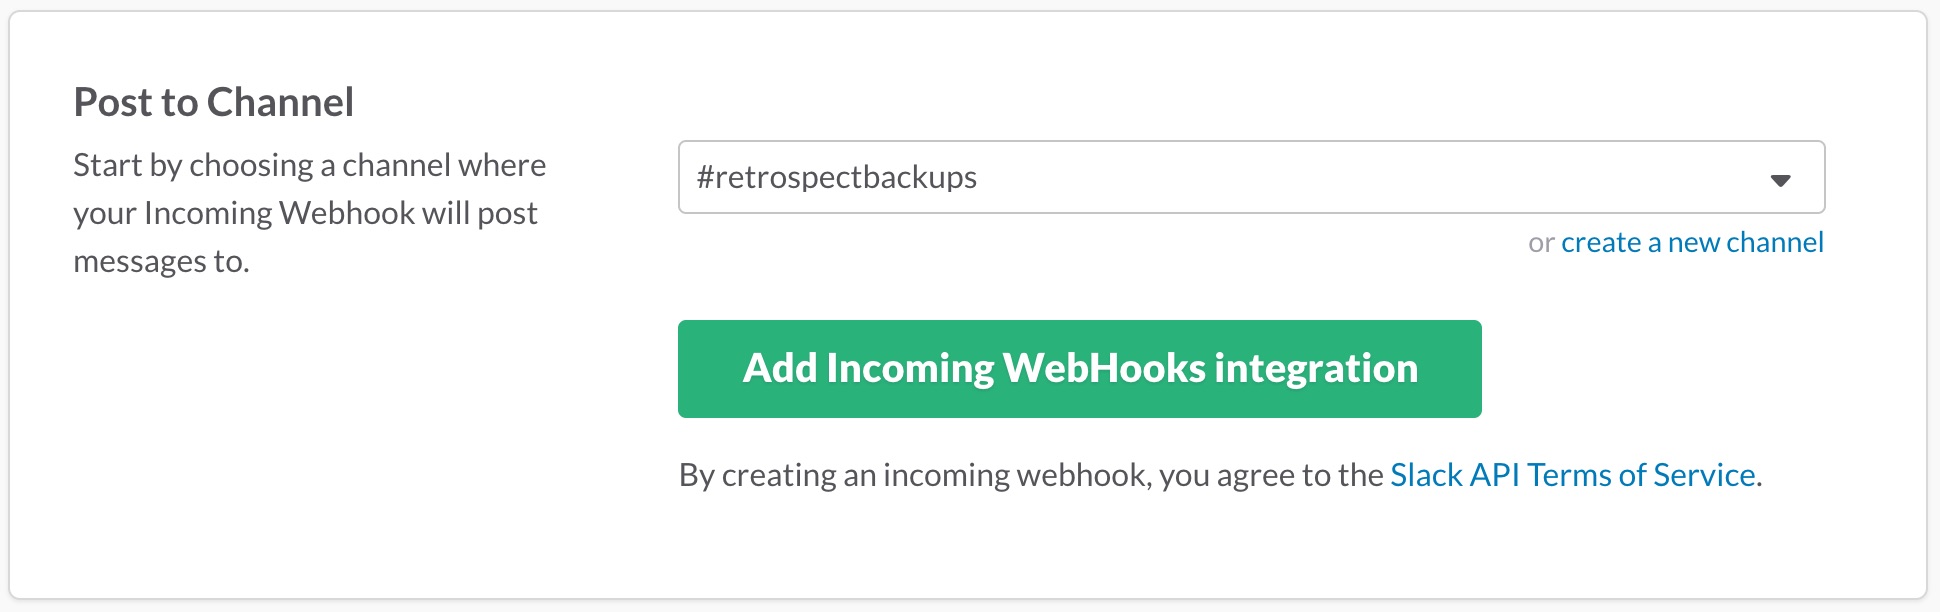 Add Incoming WebHooks integration for Retrospect